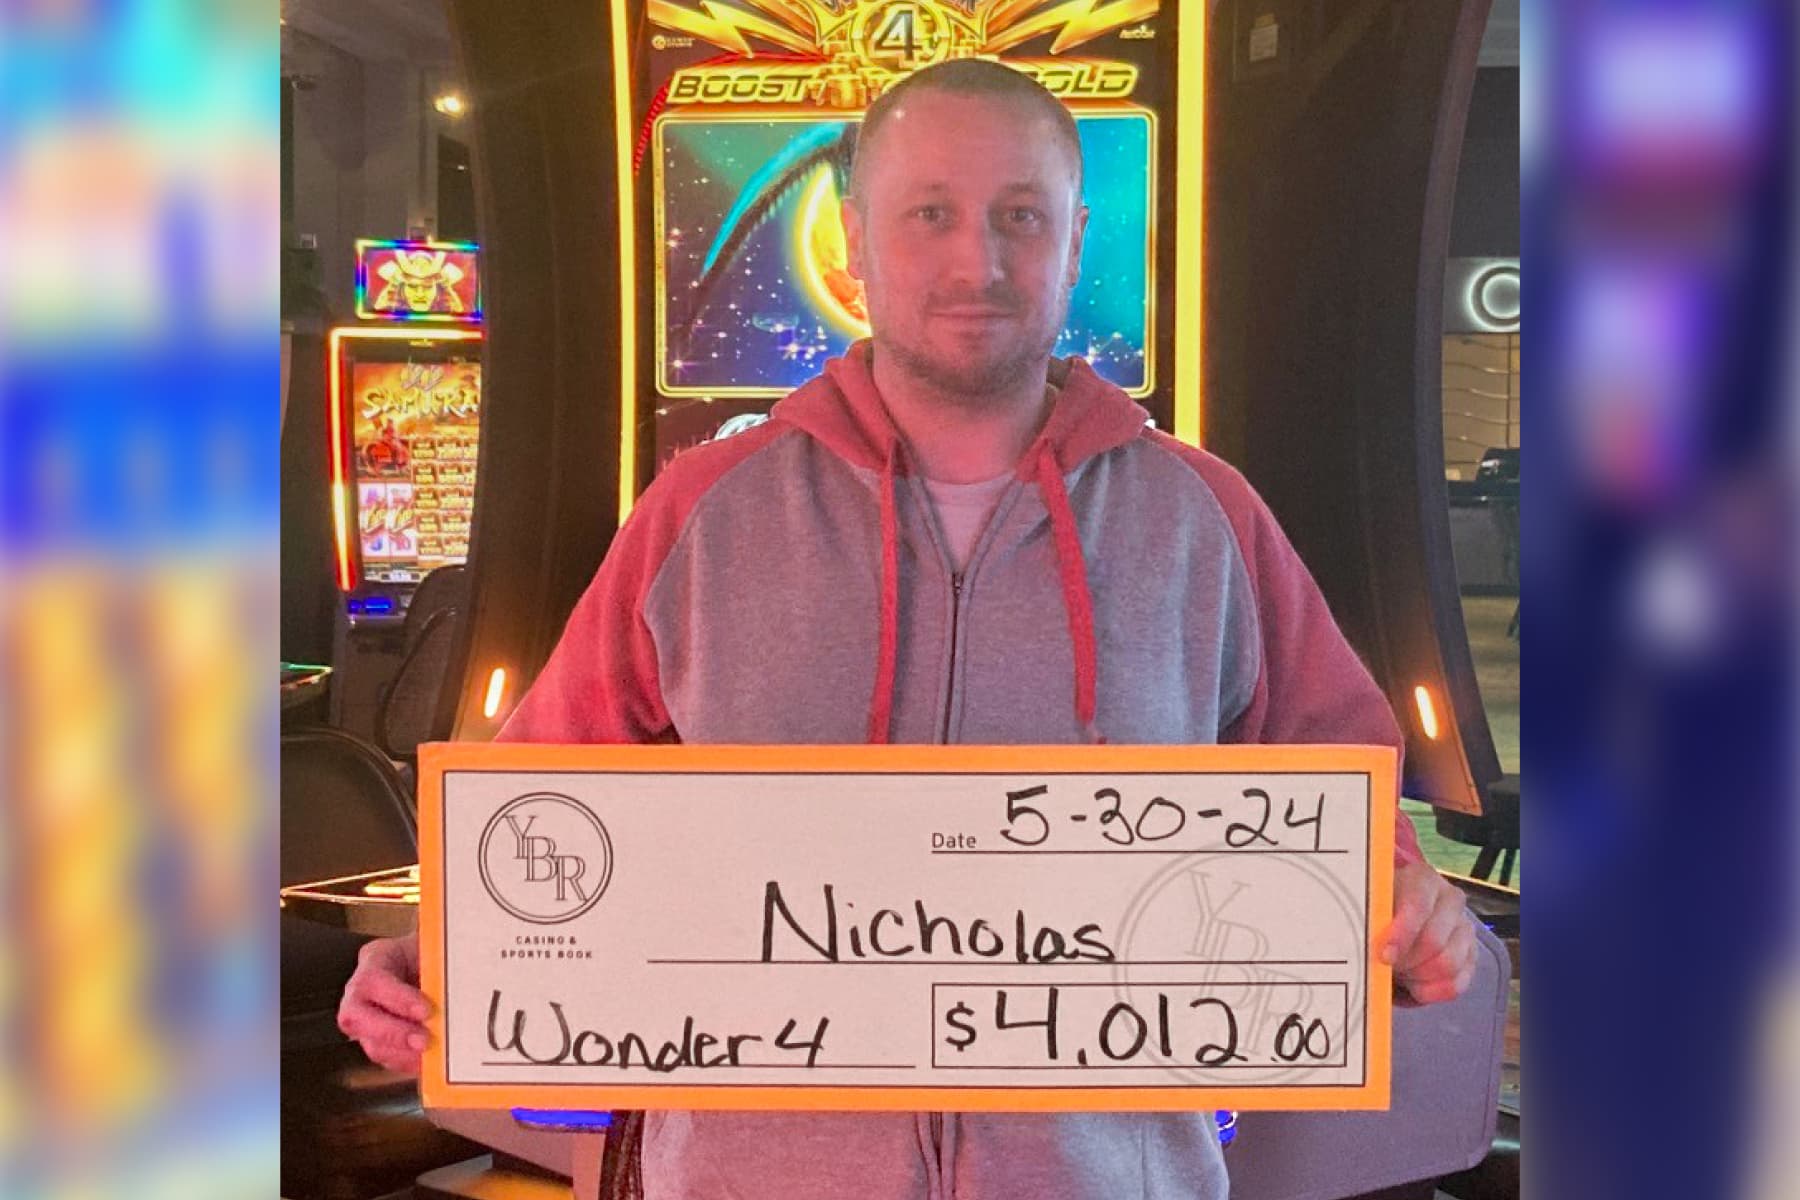 Nicholas won $4,012